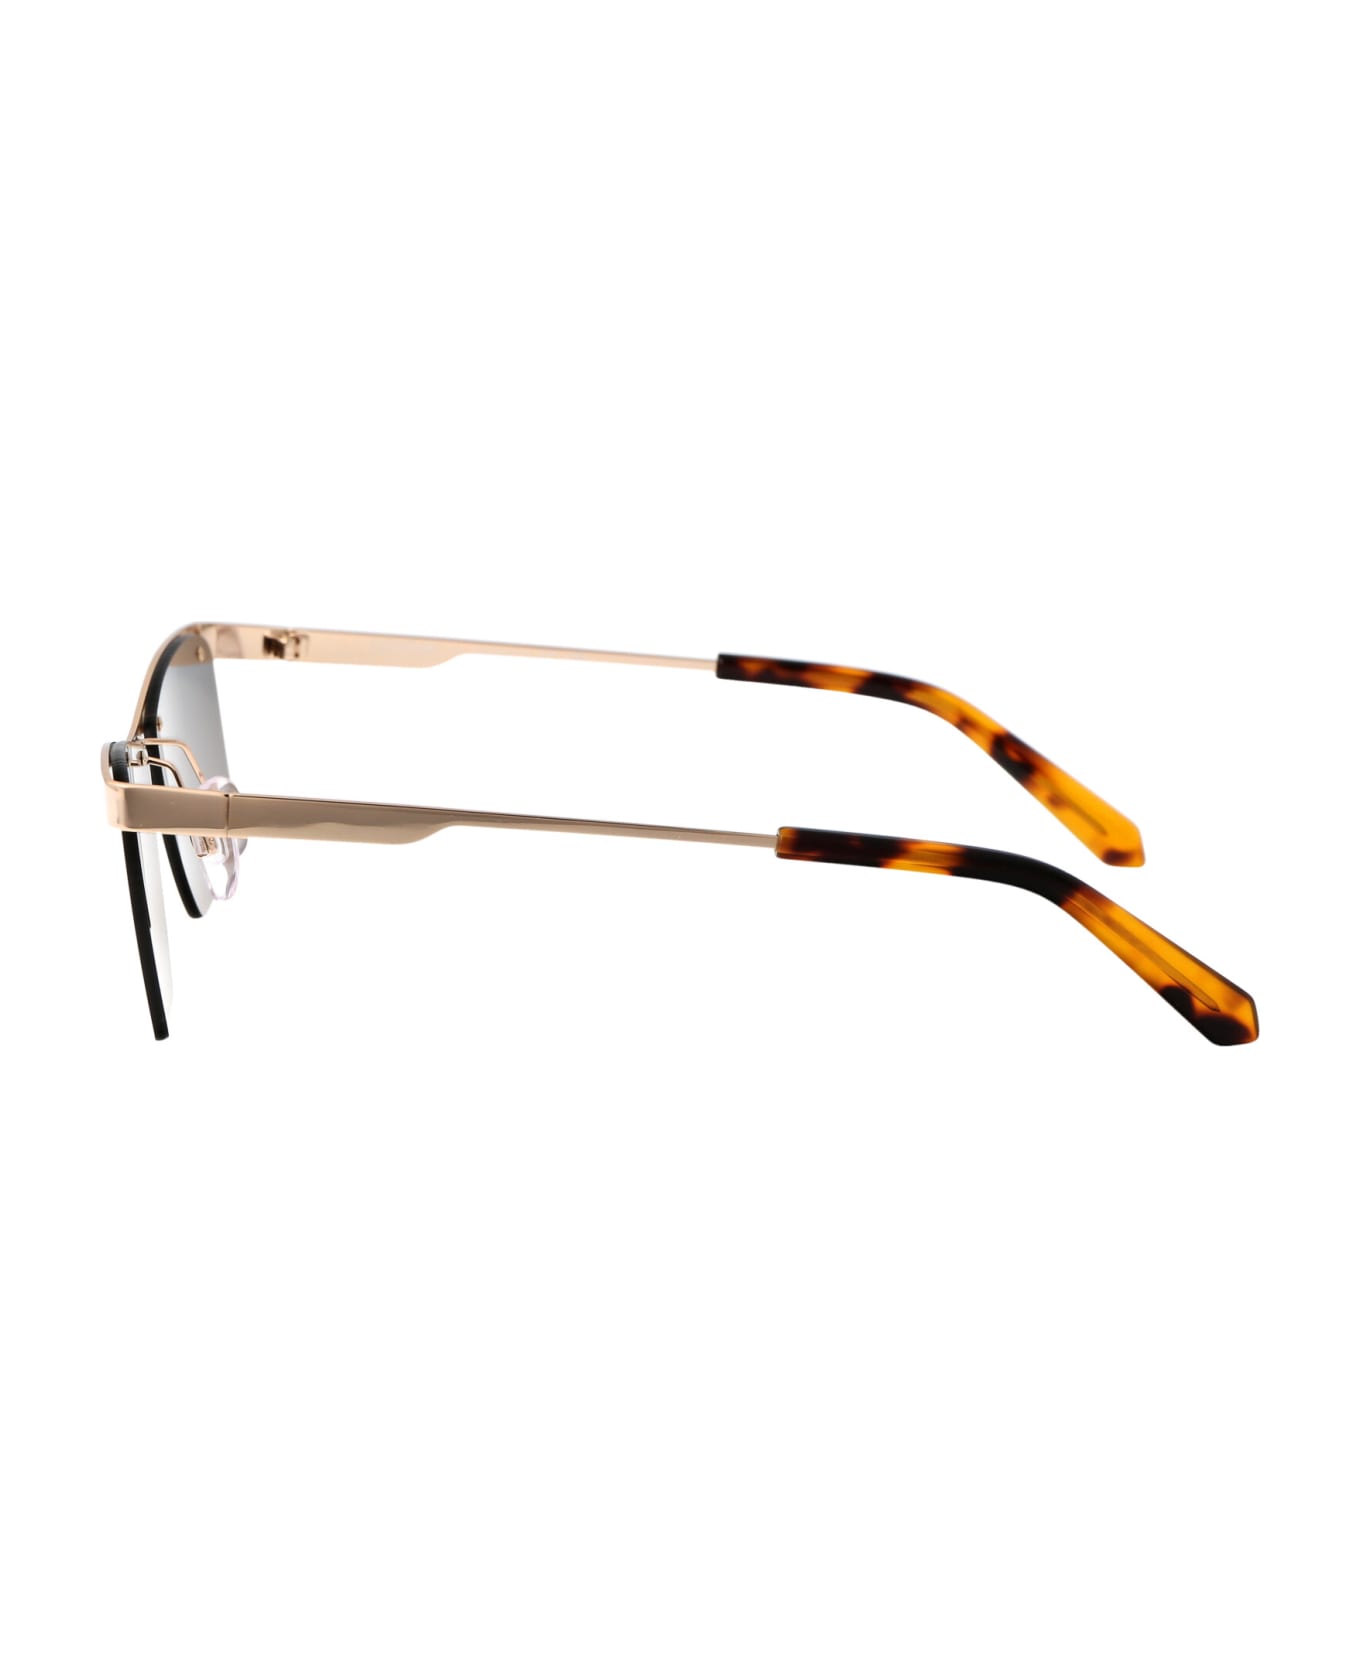 Off-White Rimini Sunglasses - 7676 GOLD